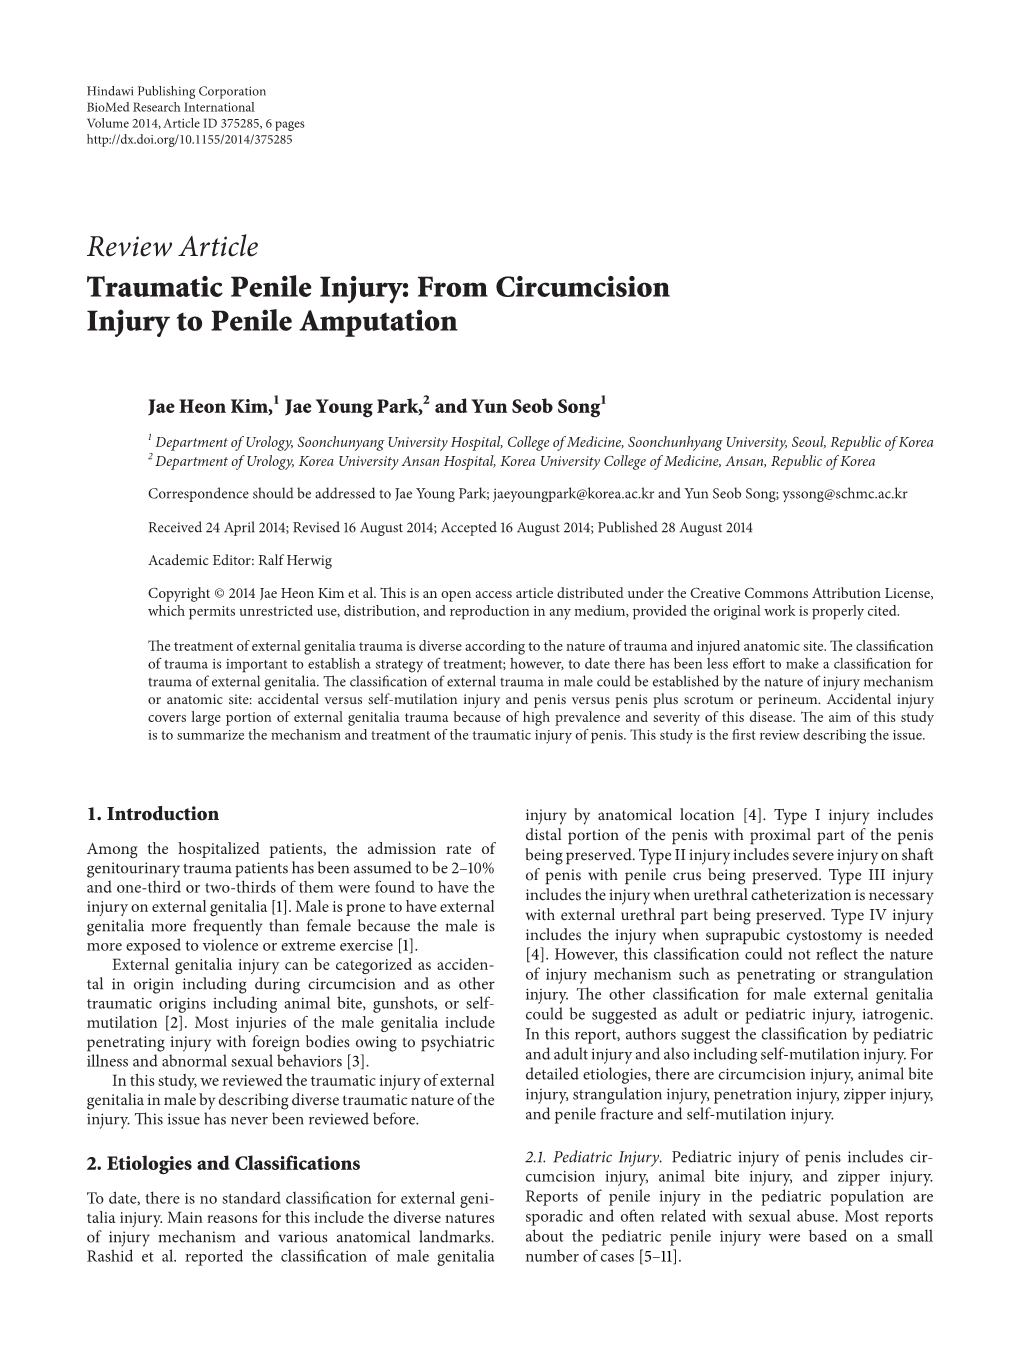 Traumatic Penile Injury: from Circumcision Injury to Penile Amputation